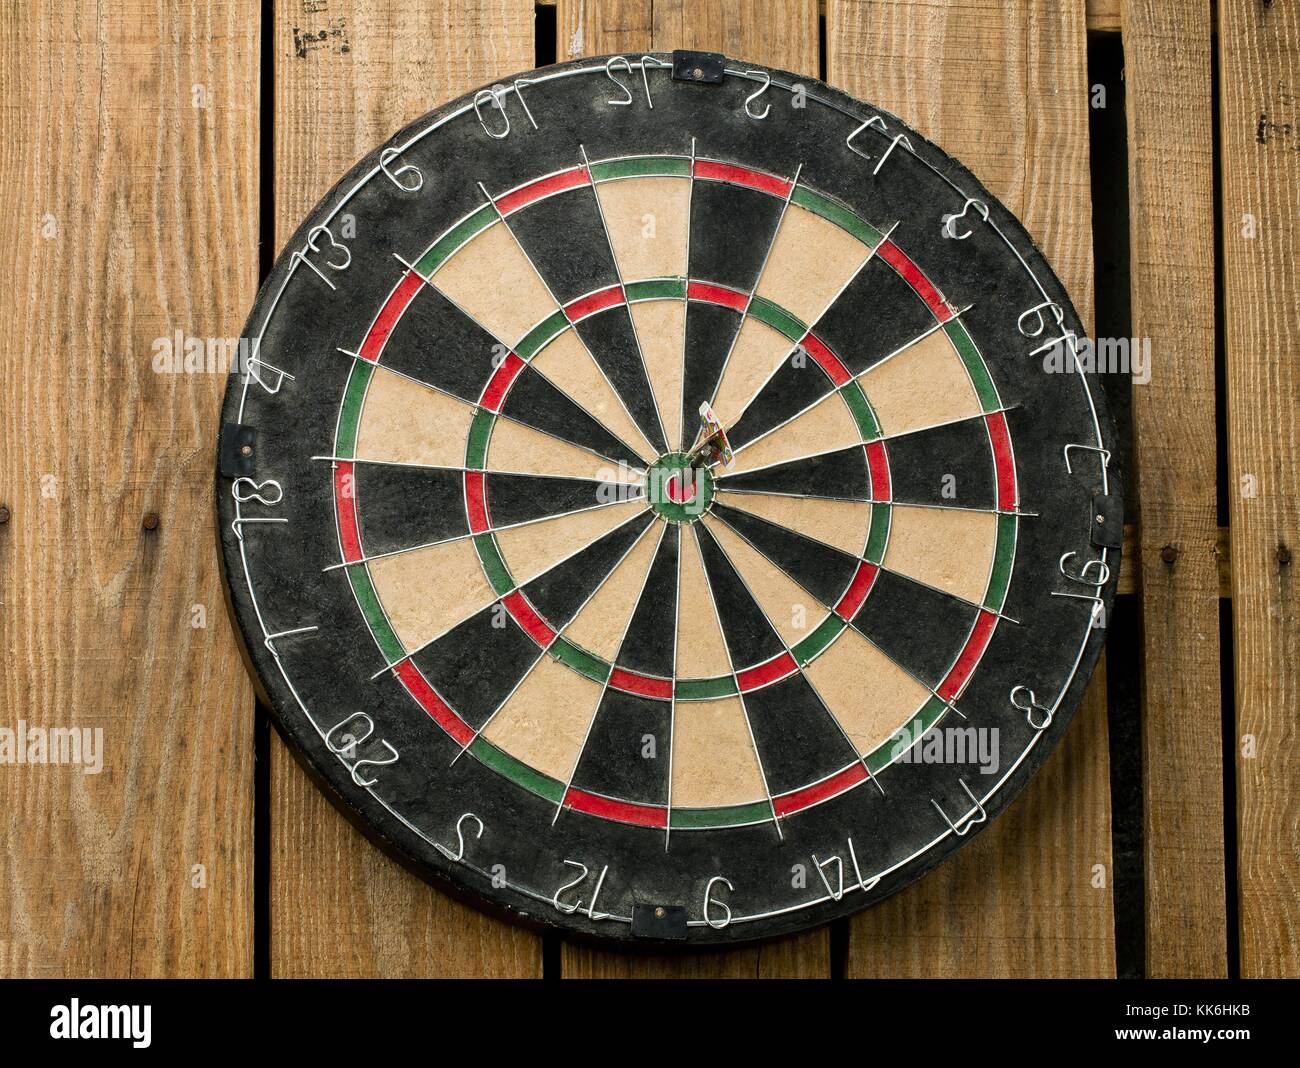 bulls eye pin on the dart board Stock Photo